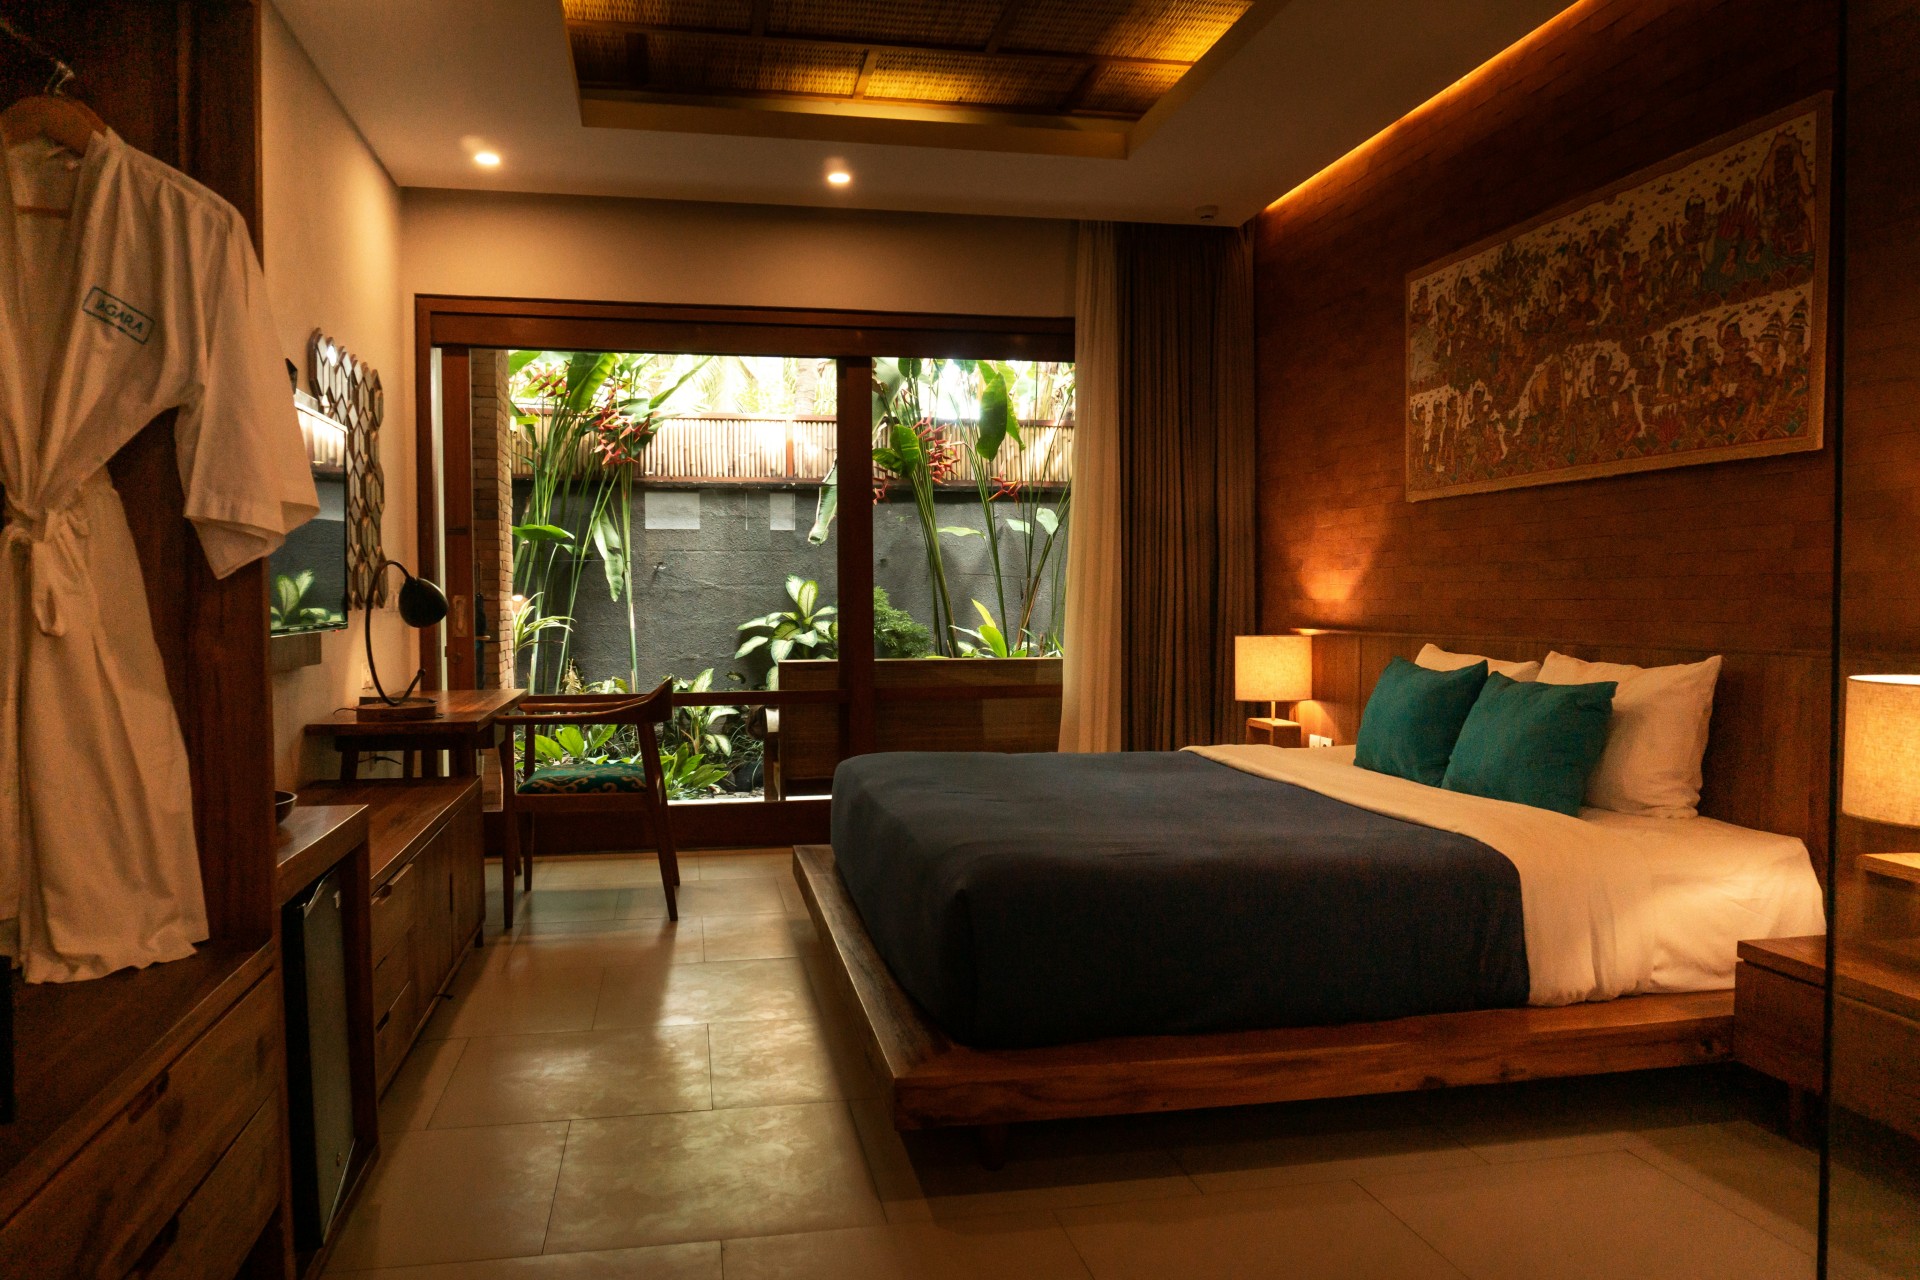 Bali, Indonesia bedroom with dark lighting